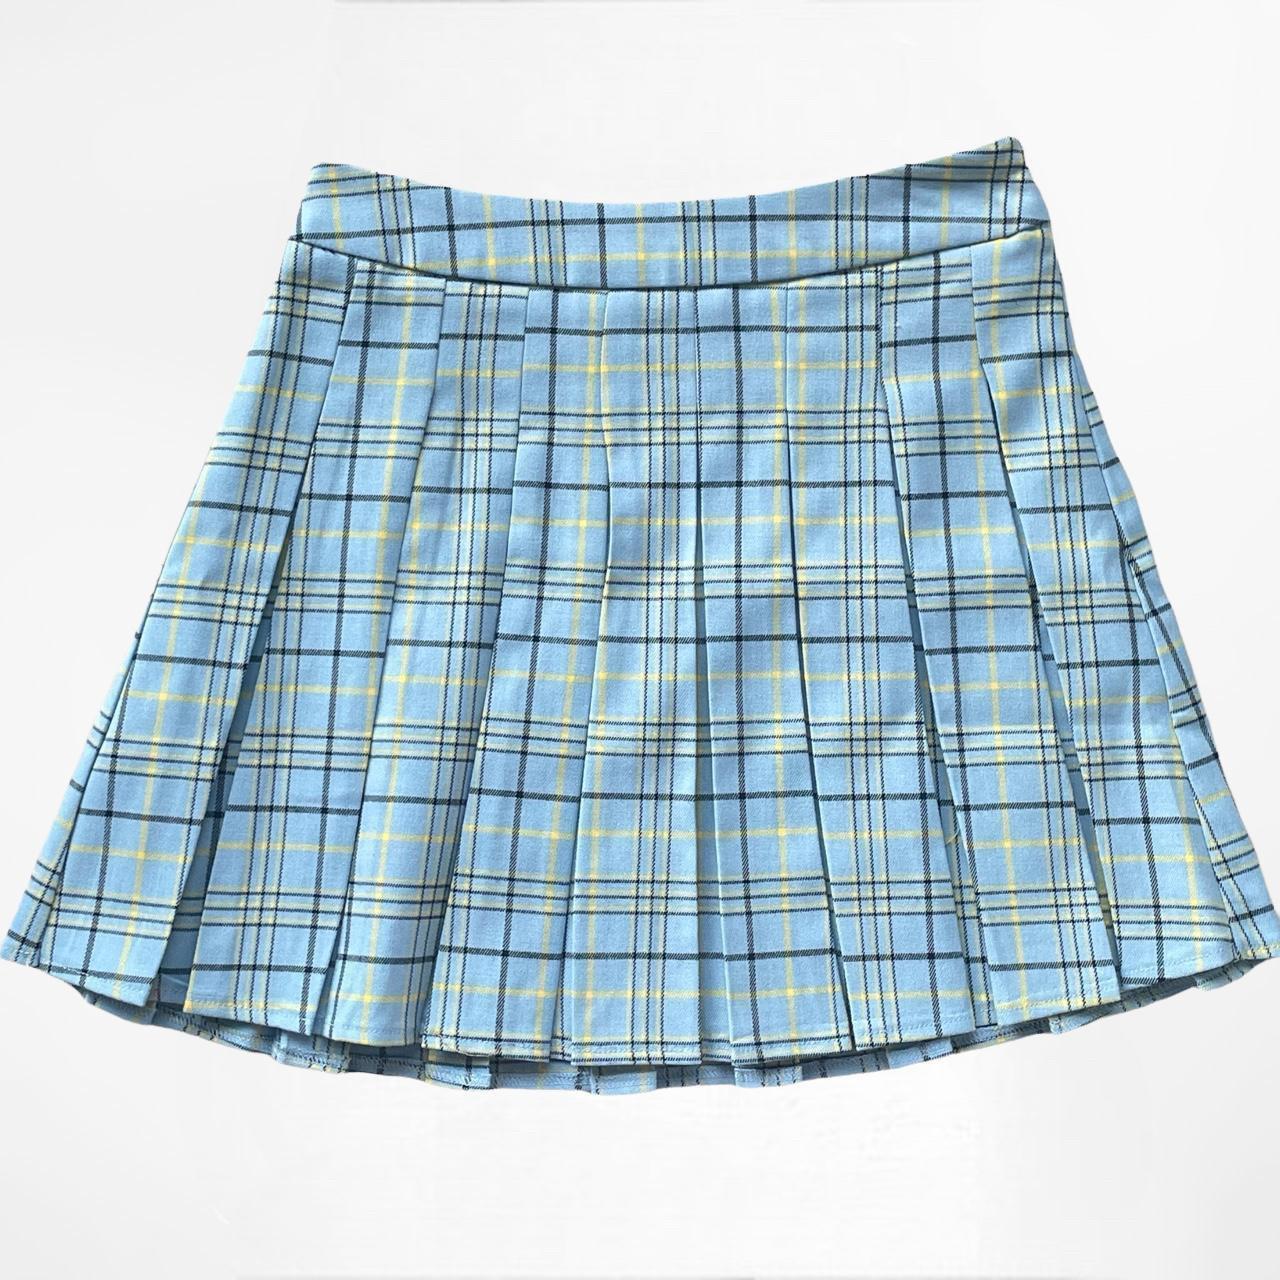 Product Image 3 - Pleated Tennis Mini Skirt

Amazing blue